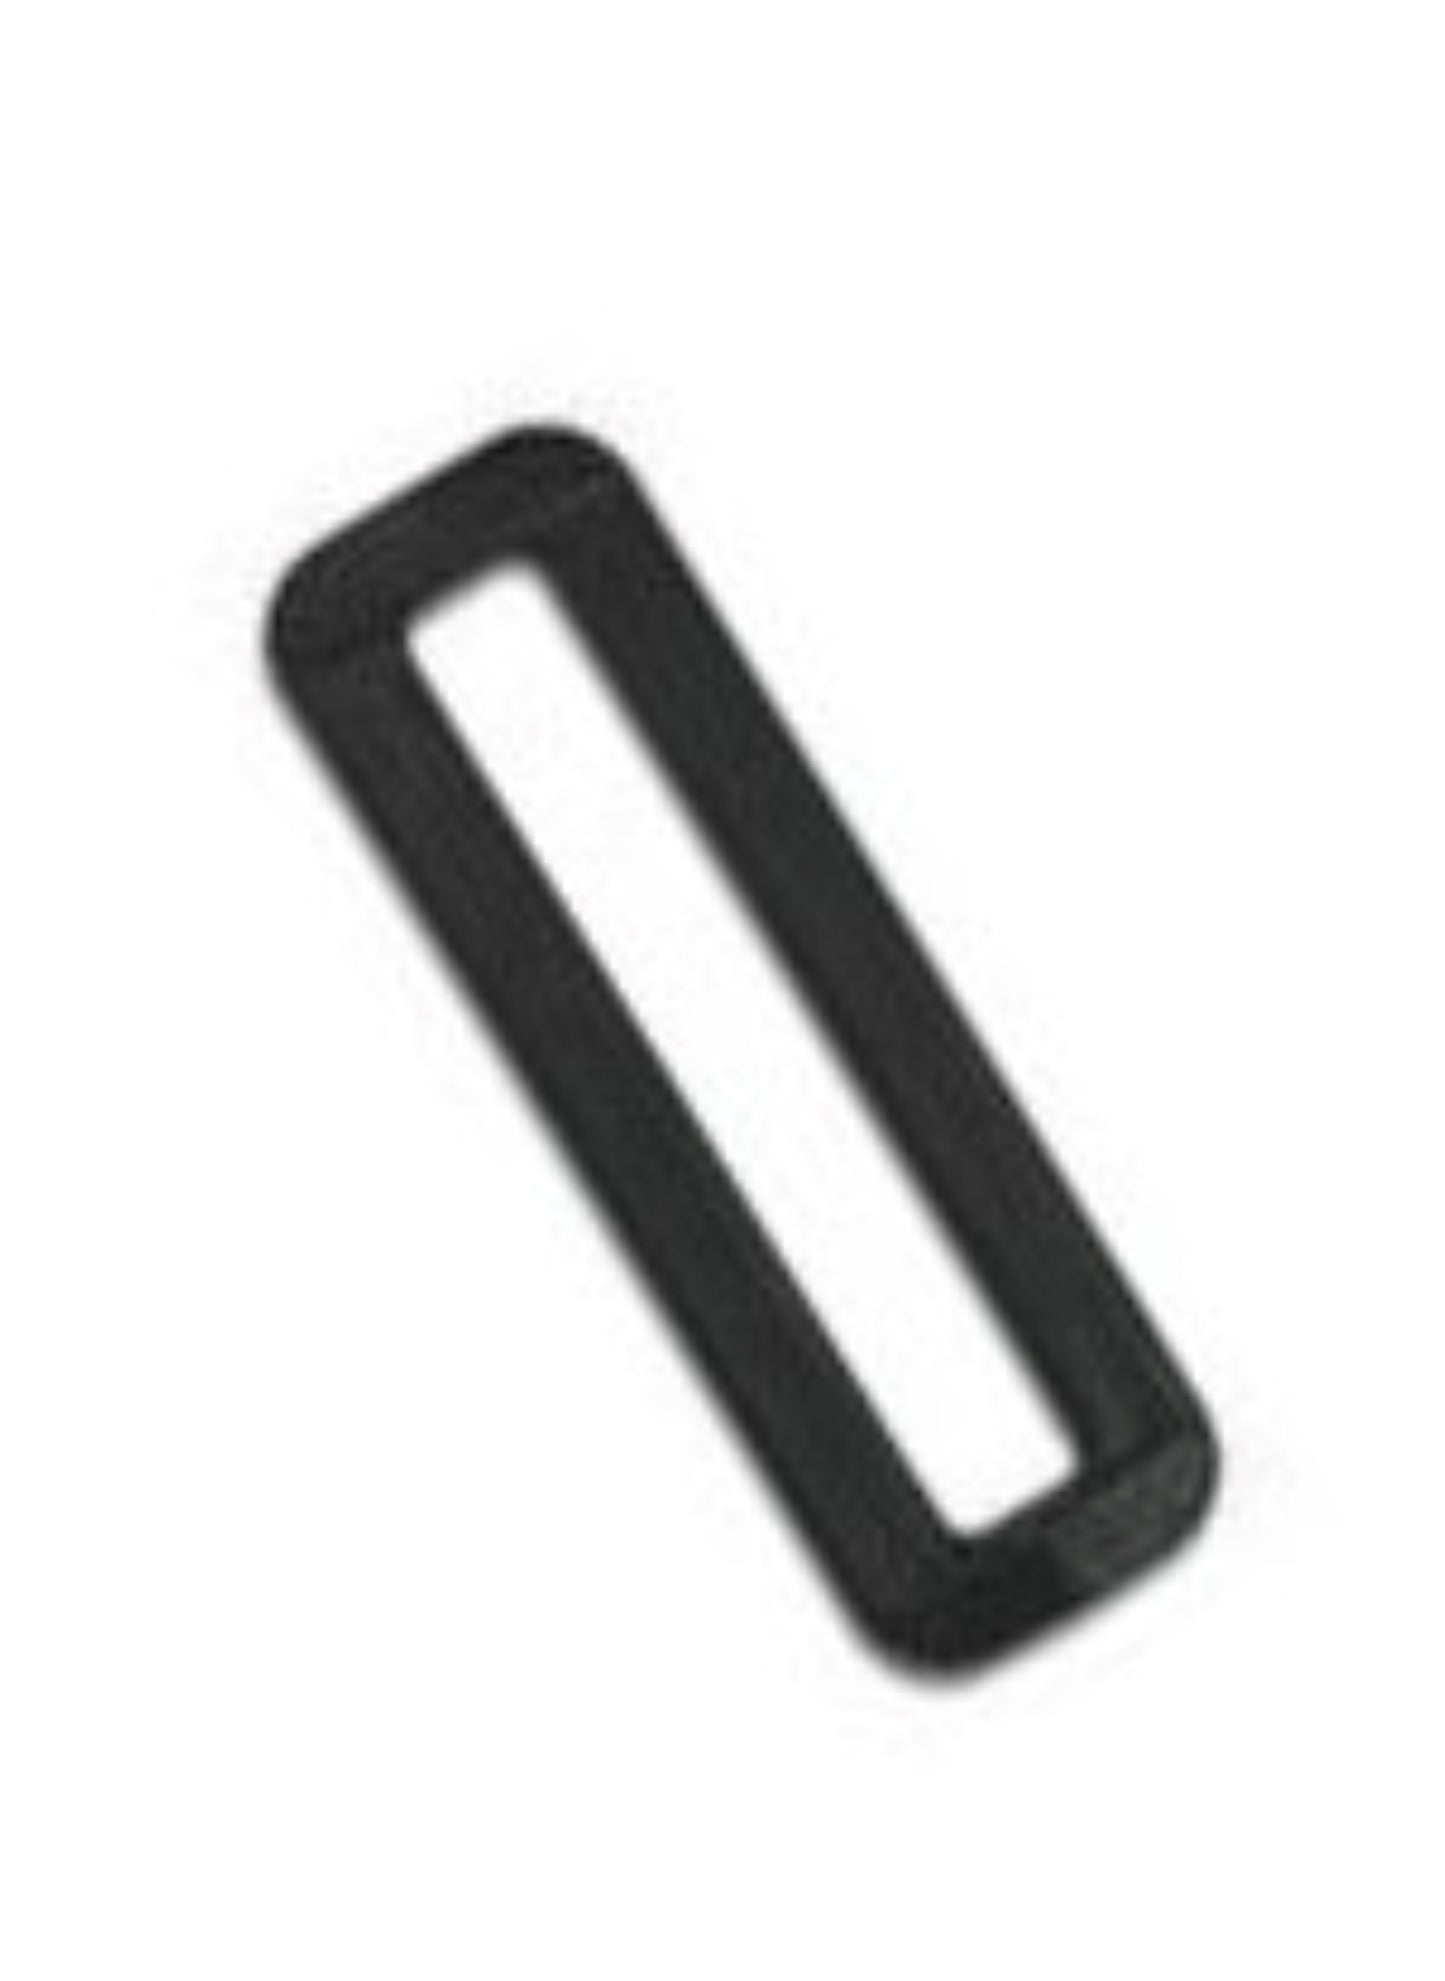 1" Heavy Duty Rectangle Plastic Loop Lock Ring Bar - Durable Webbing Slide Loop for Bags, Straps, and Various Packs